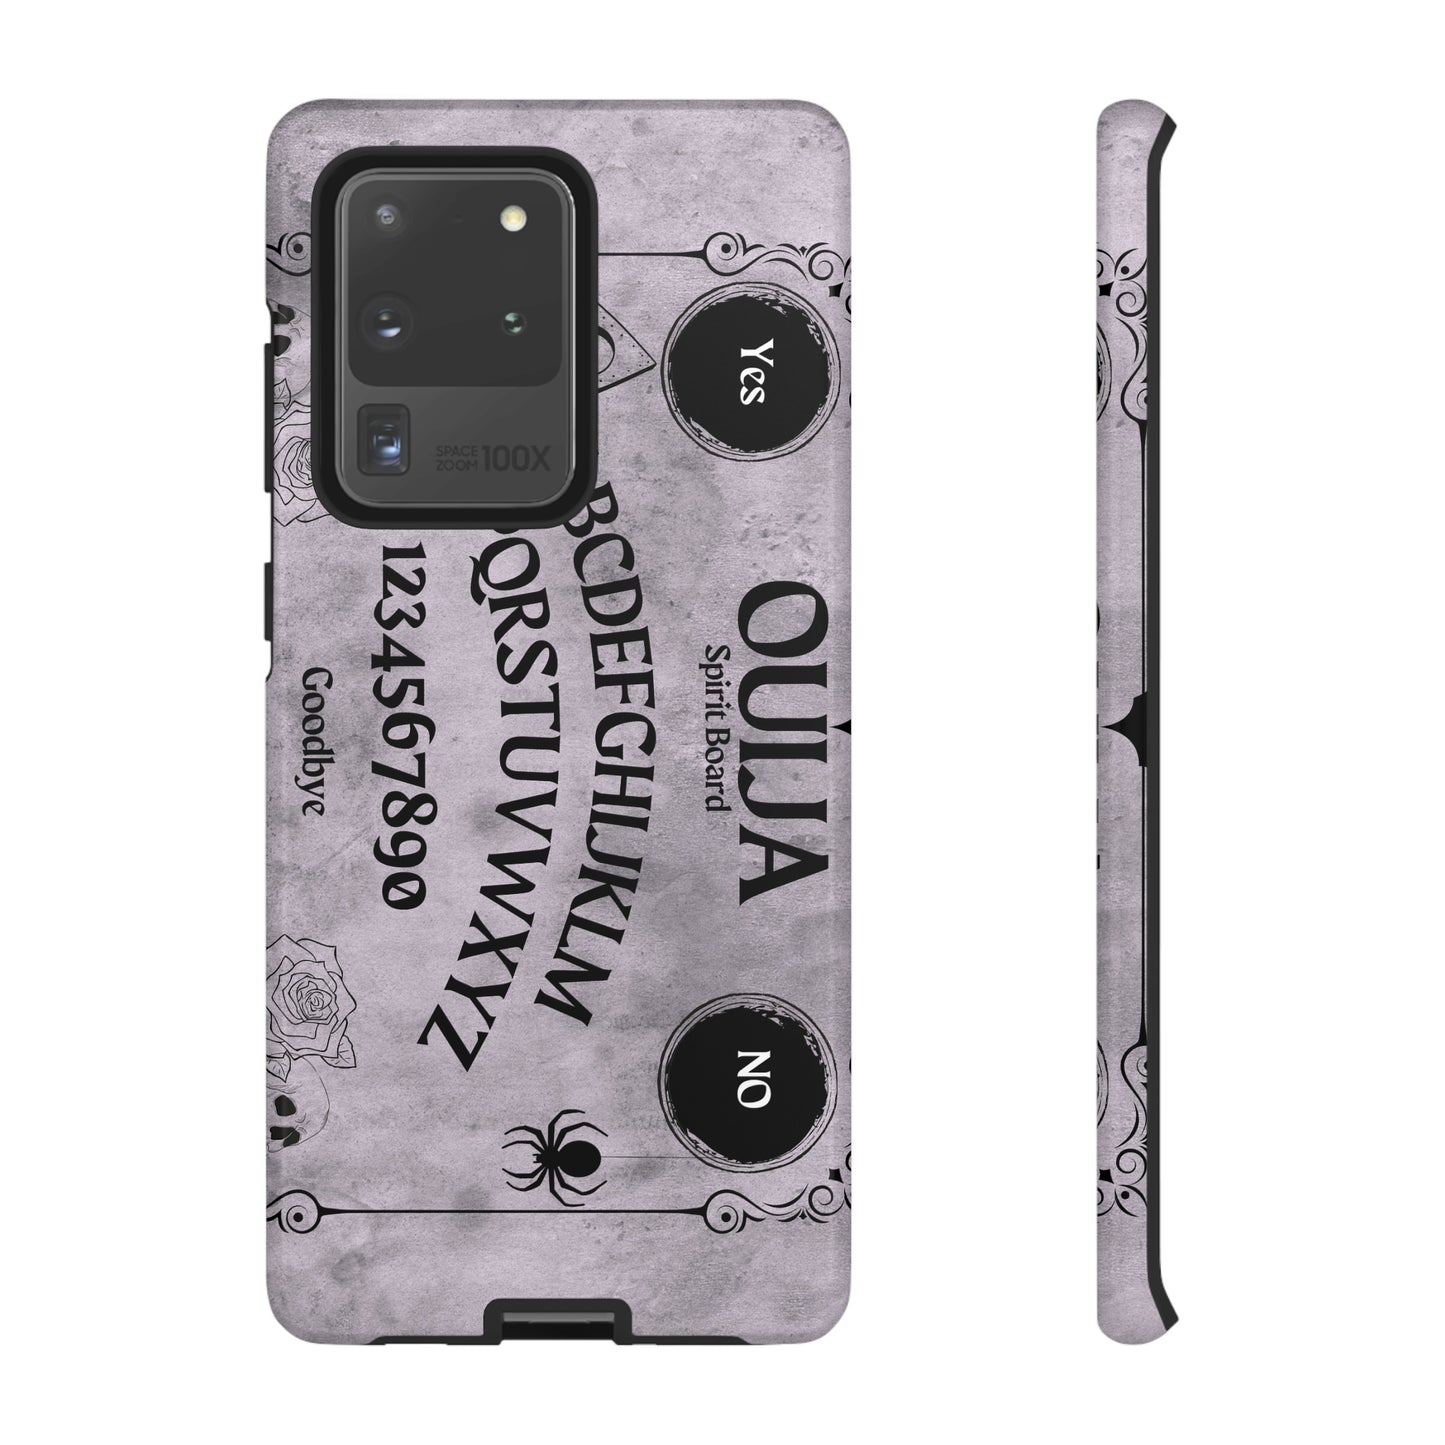 Ouija Board Tough Phone Cases For Samsung iPhone GooglePhone CaseVTZdesignsSamsung Galaxy S20 UltraGlossyAccessoriesGlossyhalloween